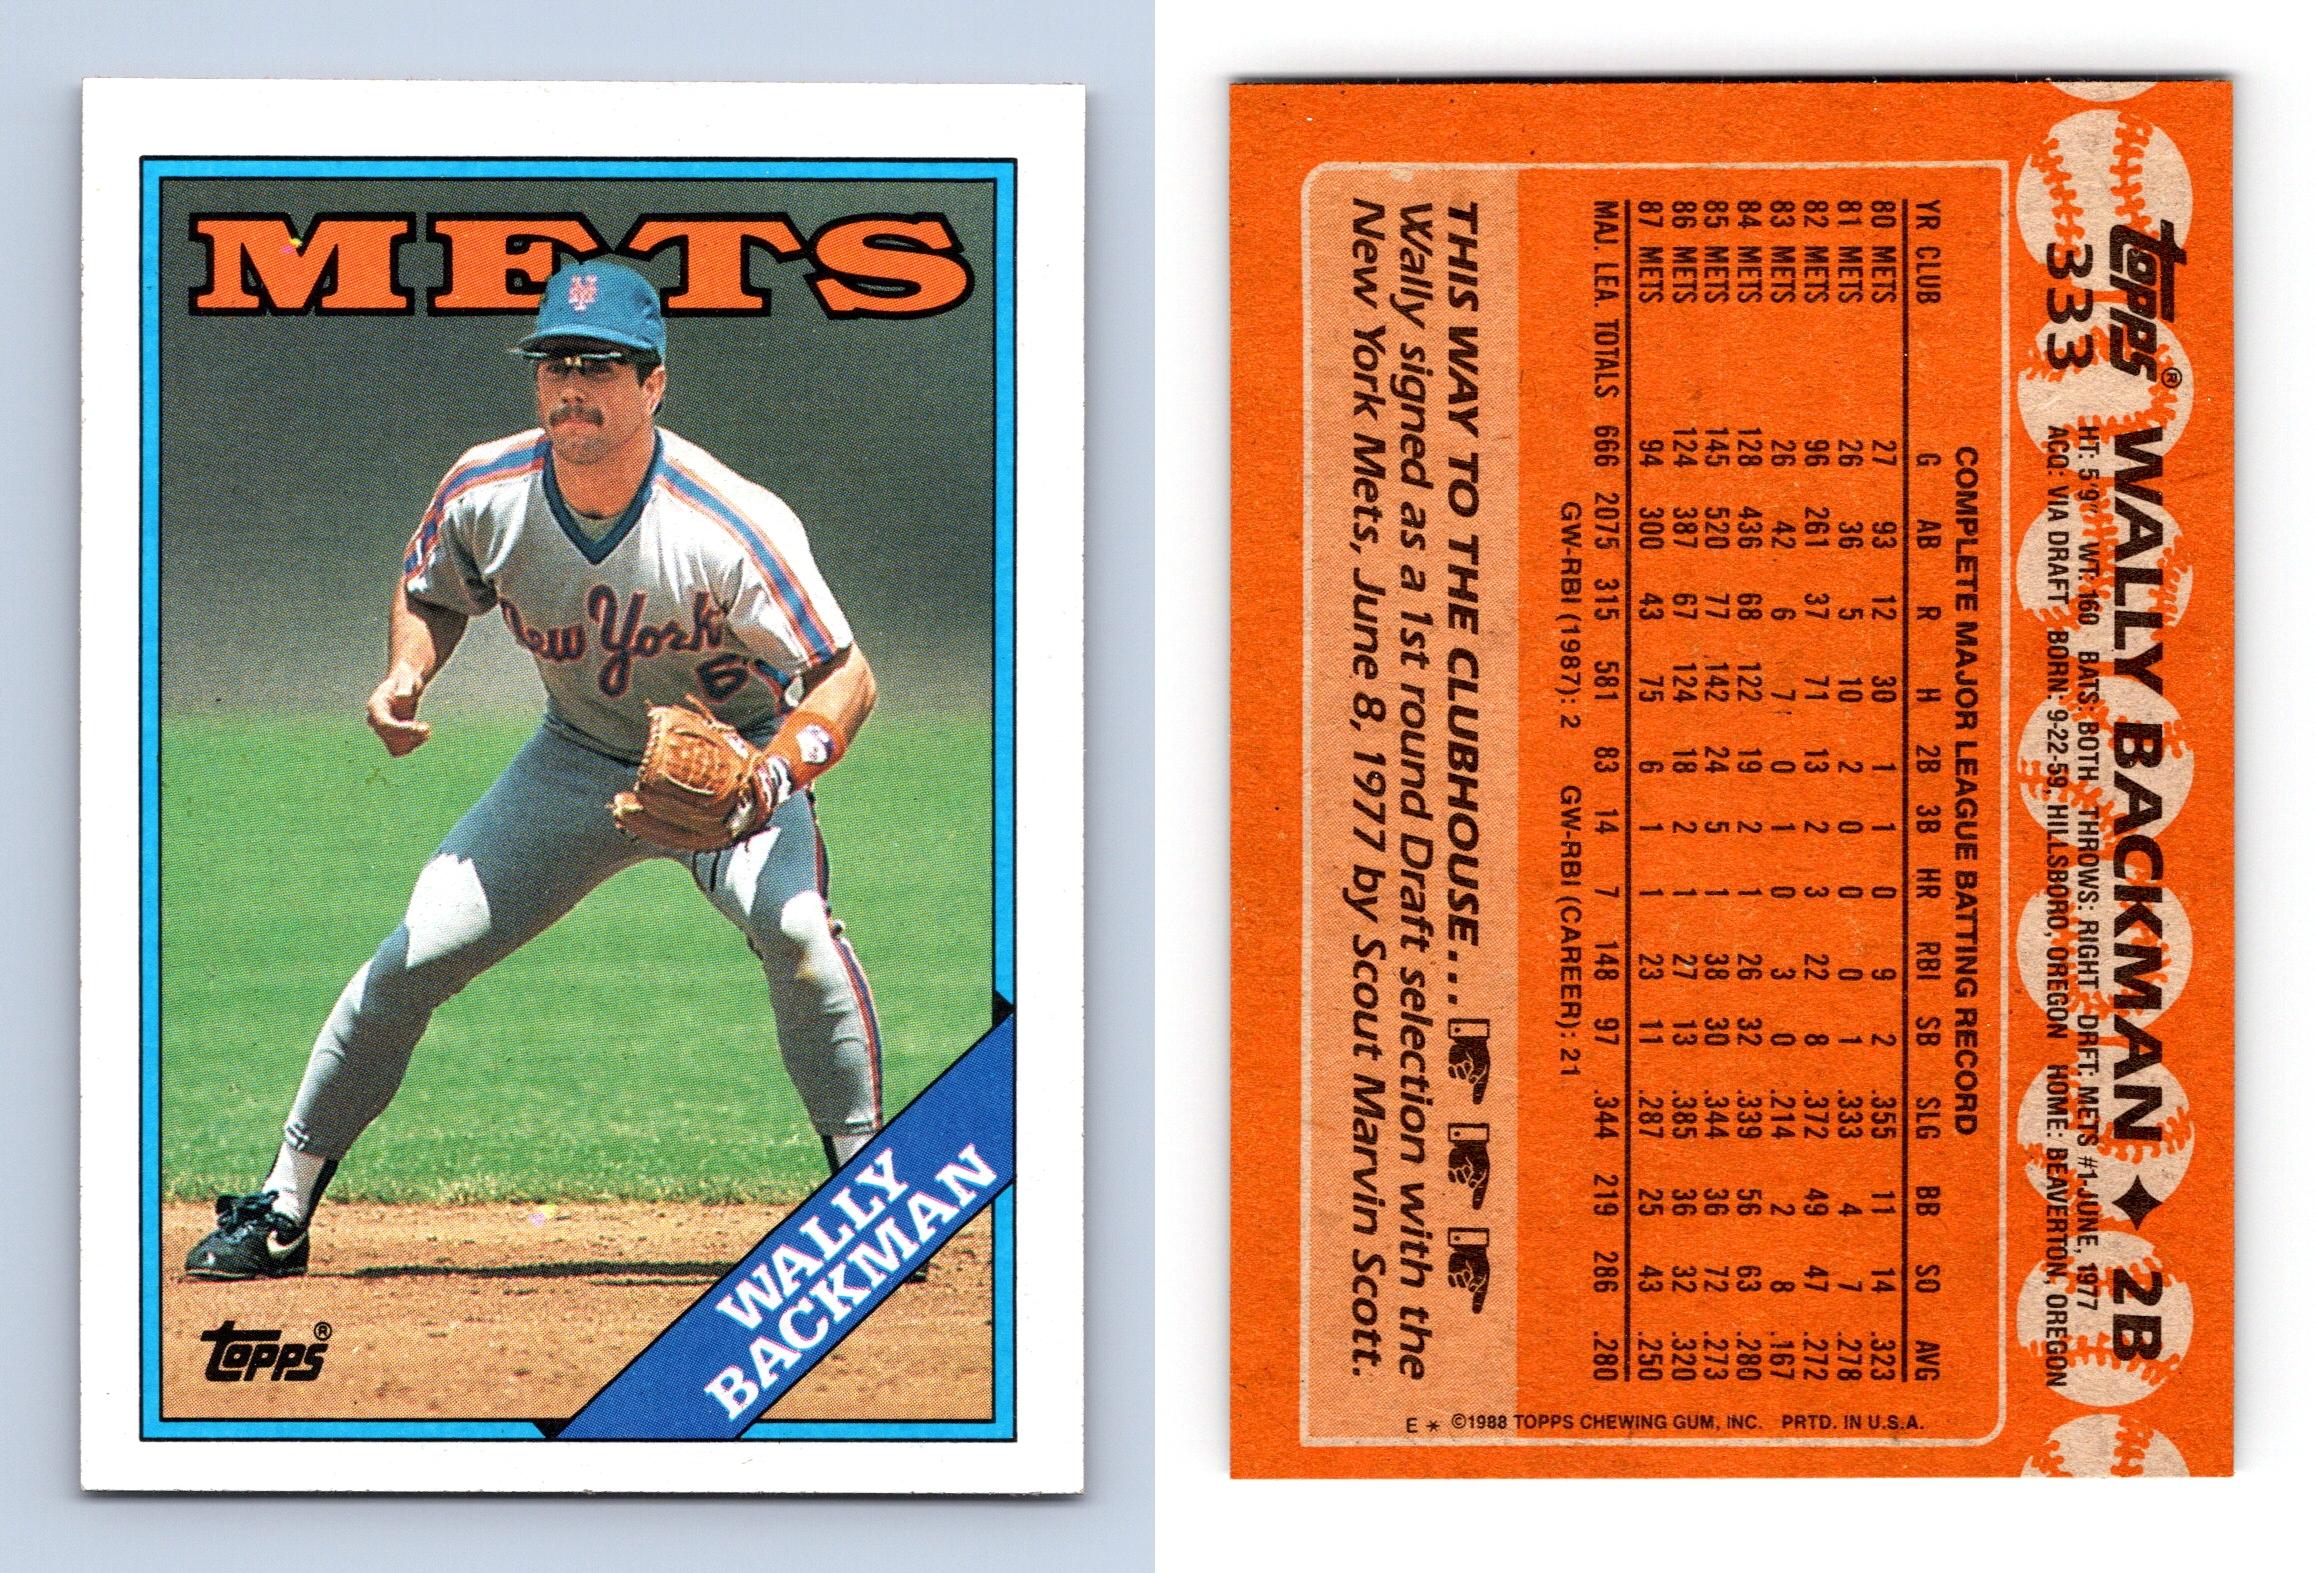 Wally Backman Baseball Cards